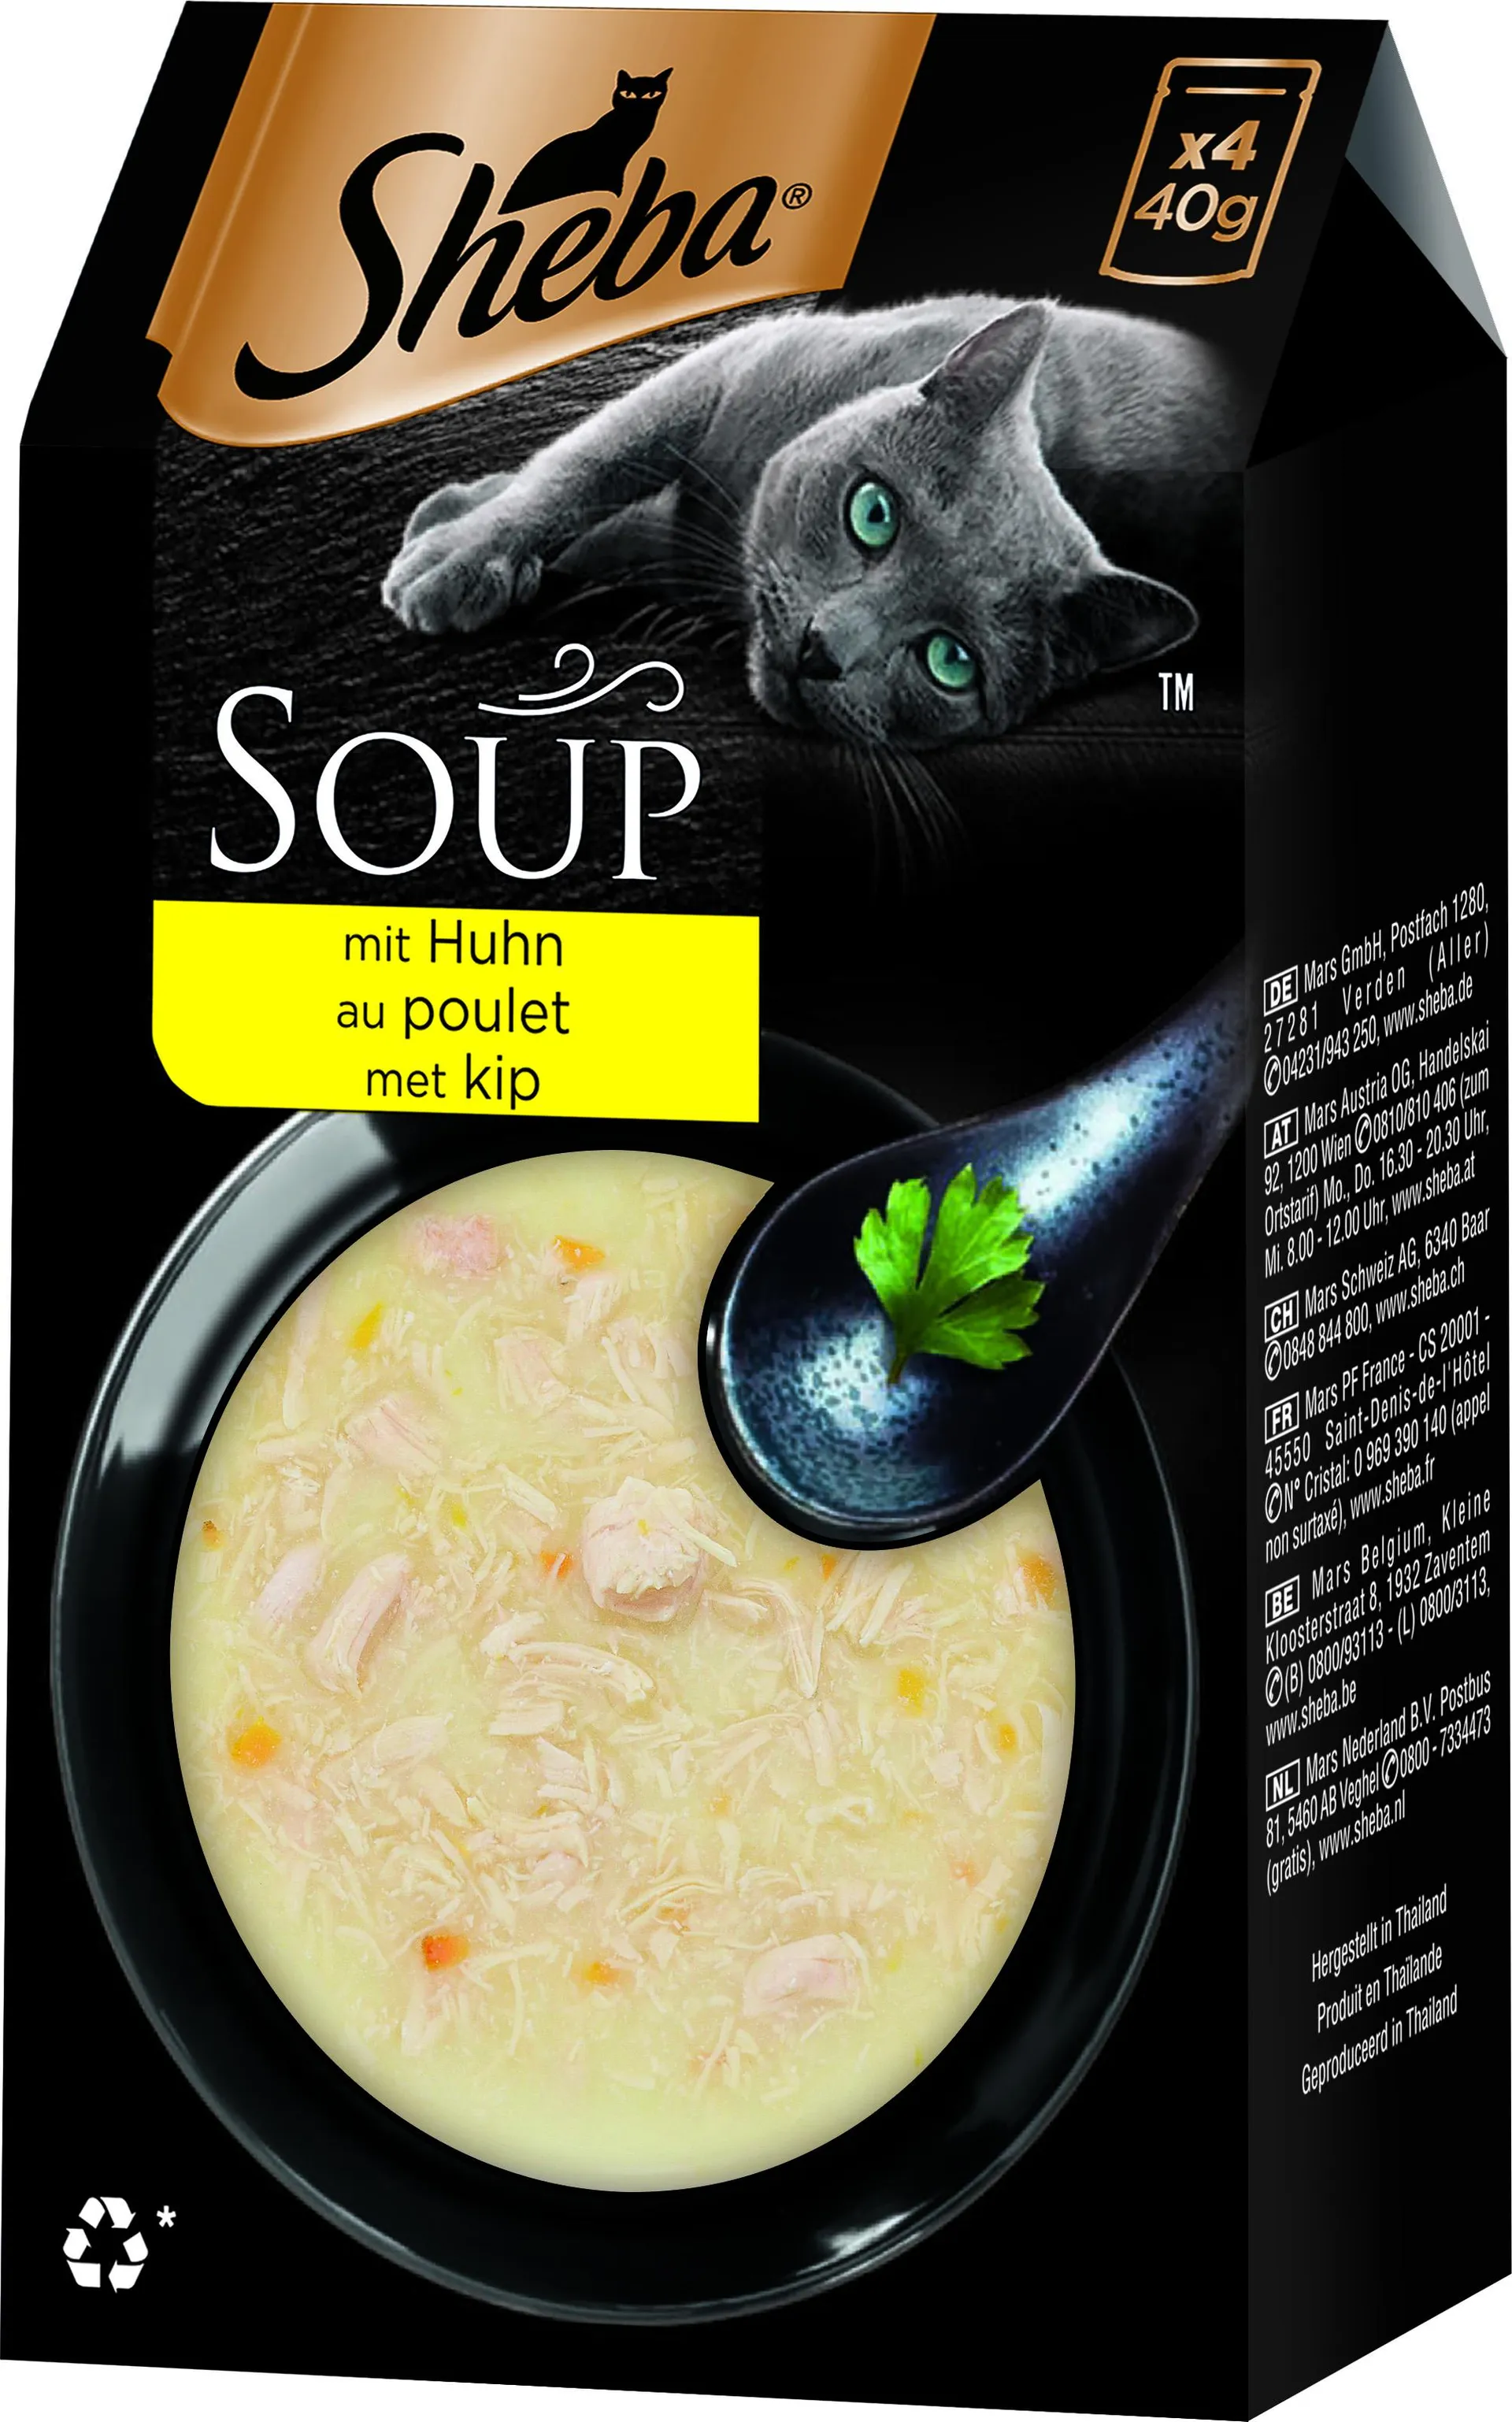 Sheba real soup kip 4x40g